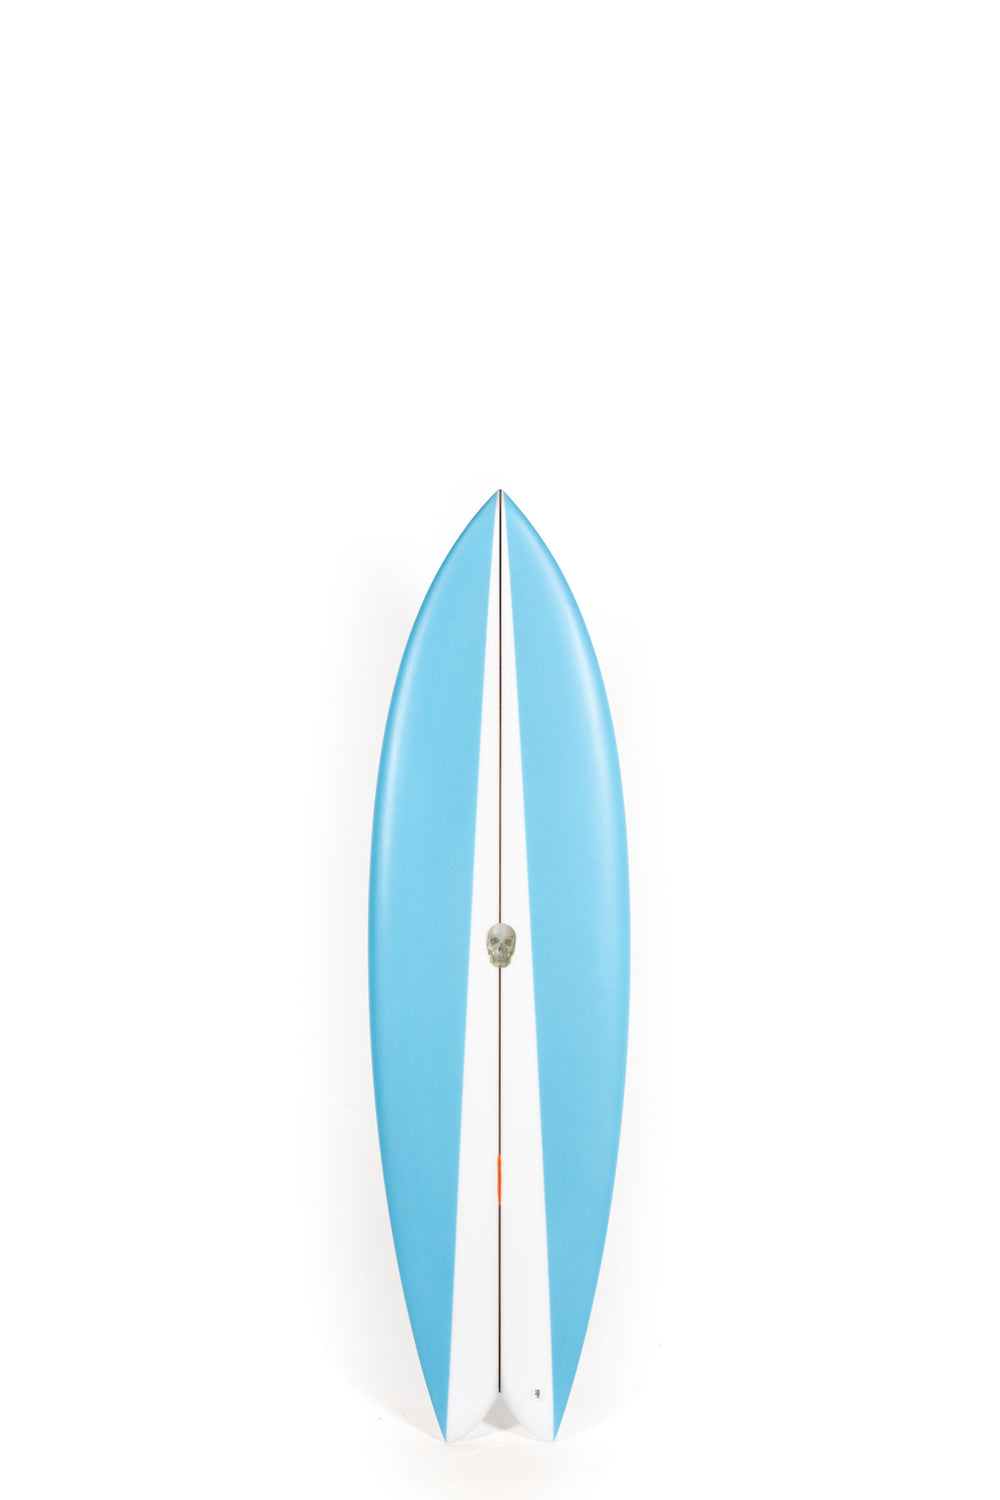 Puka sSurf Shop - Christenson Surfboards - NAUTILUS - 6'0